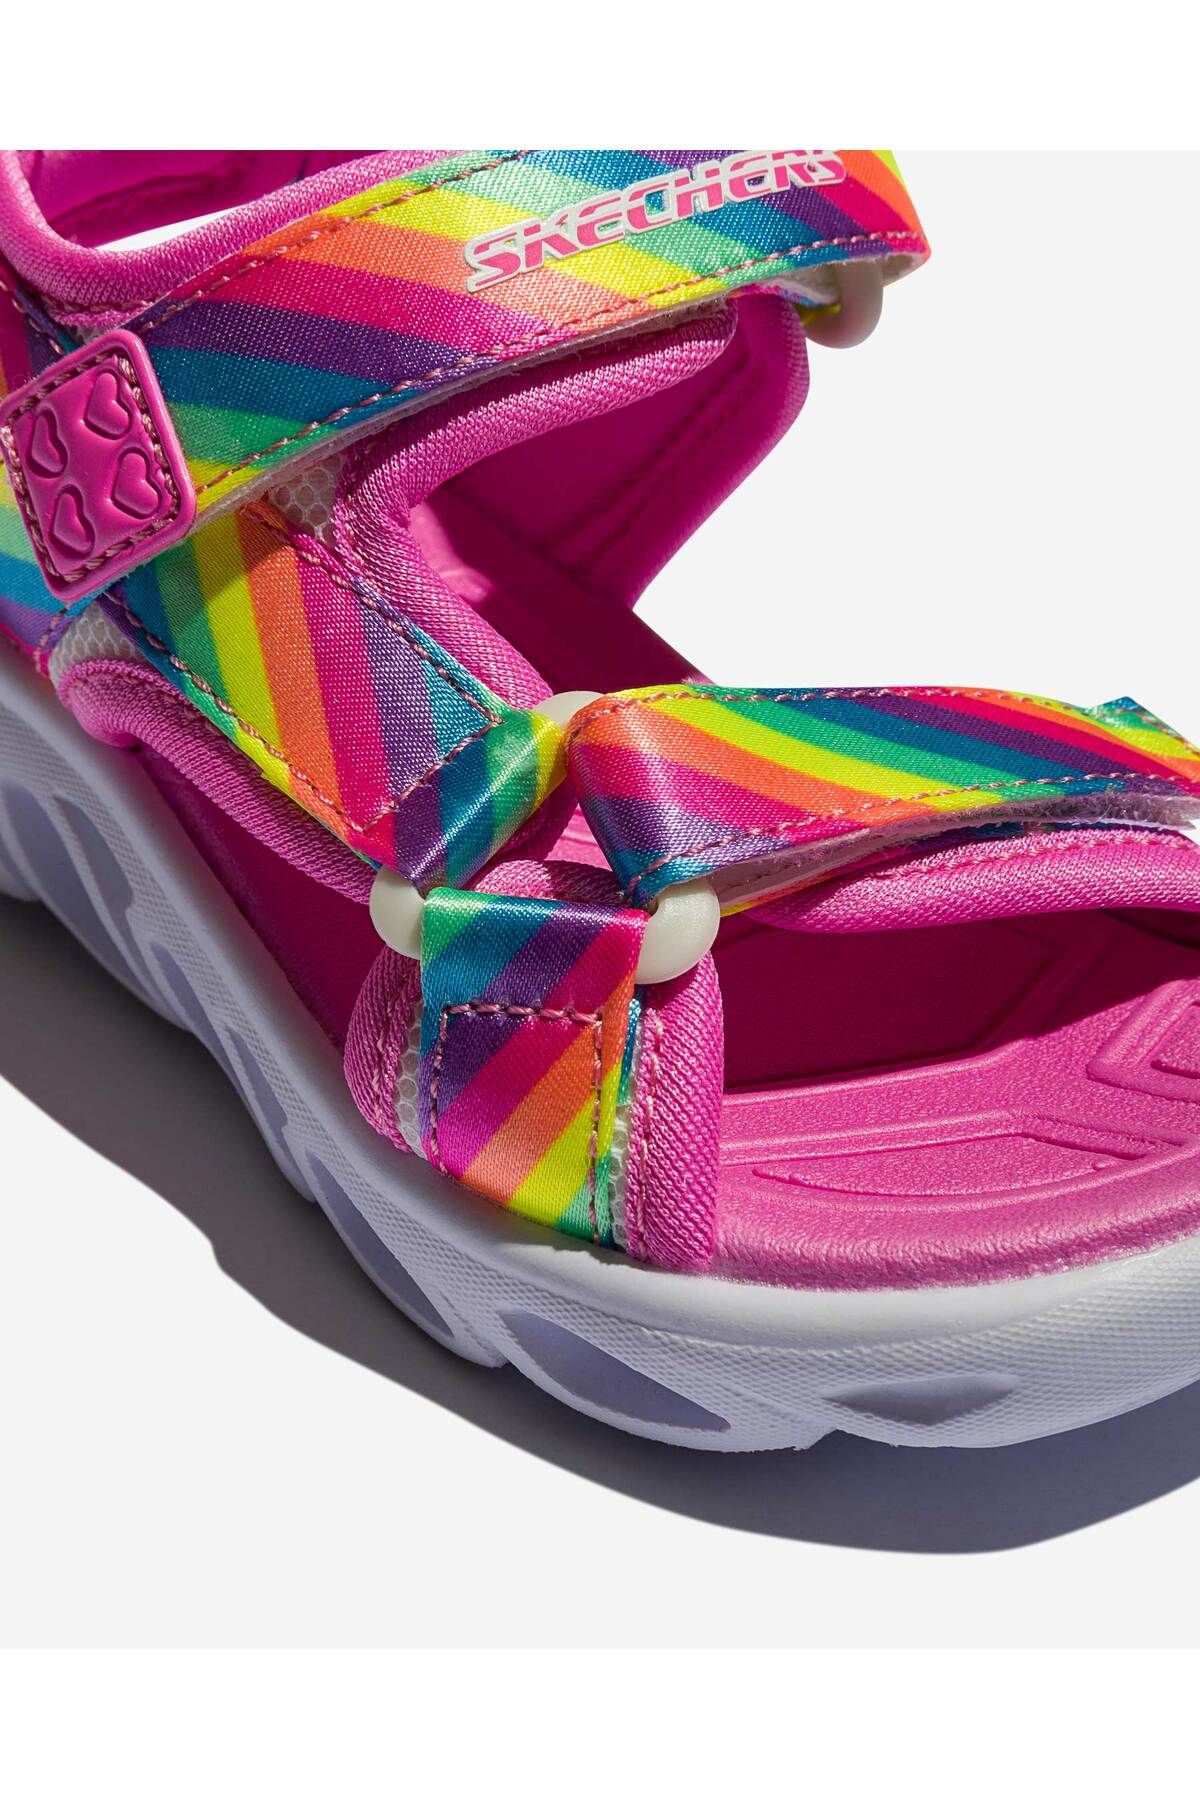 Skechers Hypno Spash Lights Little Girl Sandals Light Multi Color 20218N MLT